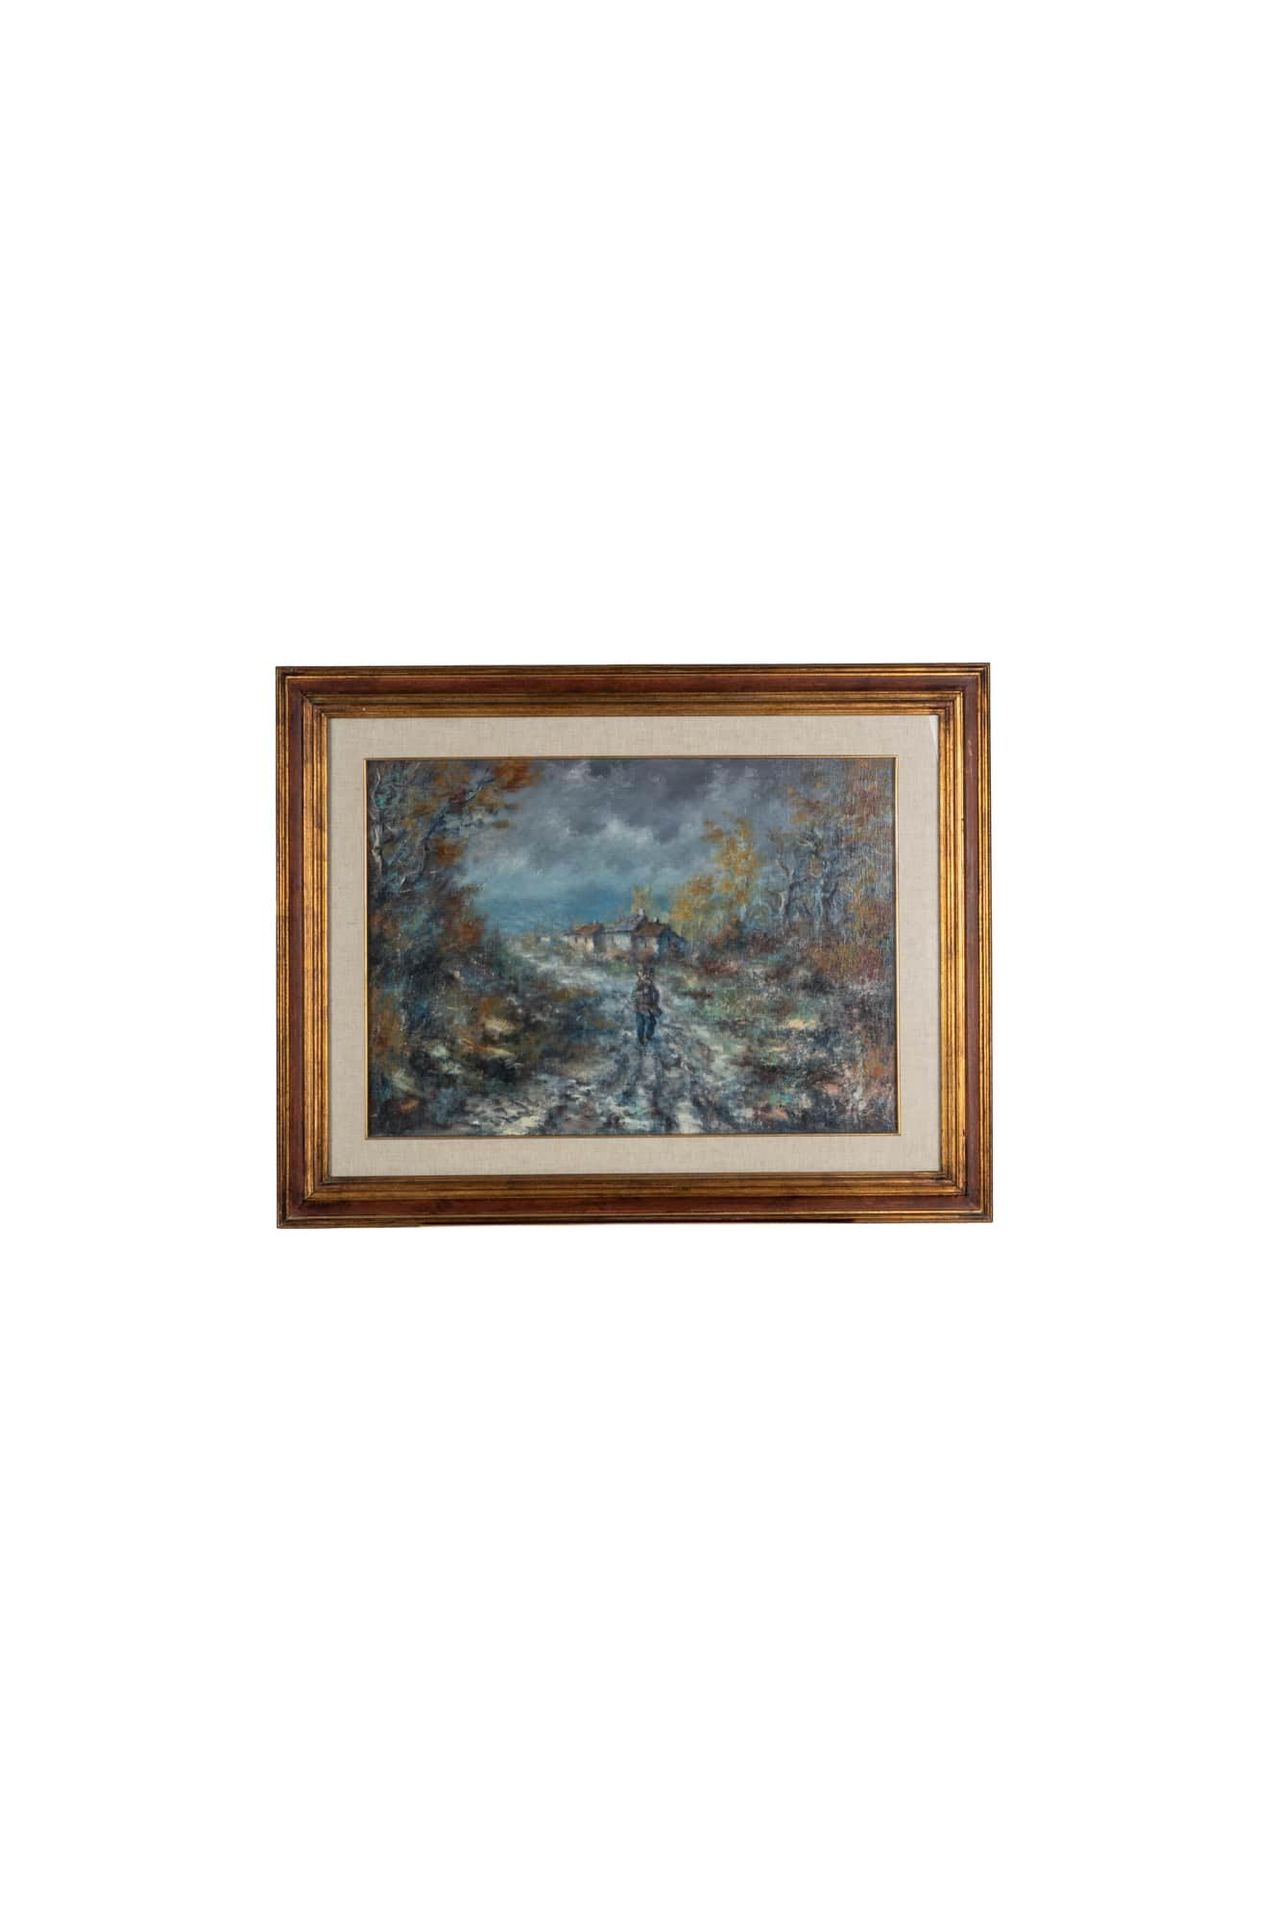 VITTORIO ANGINI (Arezzo 1946) The Autumn

1975

oil on canvas

cm 50x70

signed &hellip;